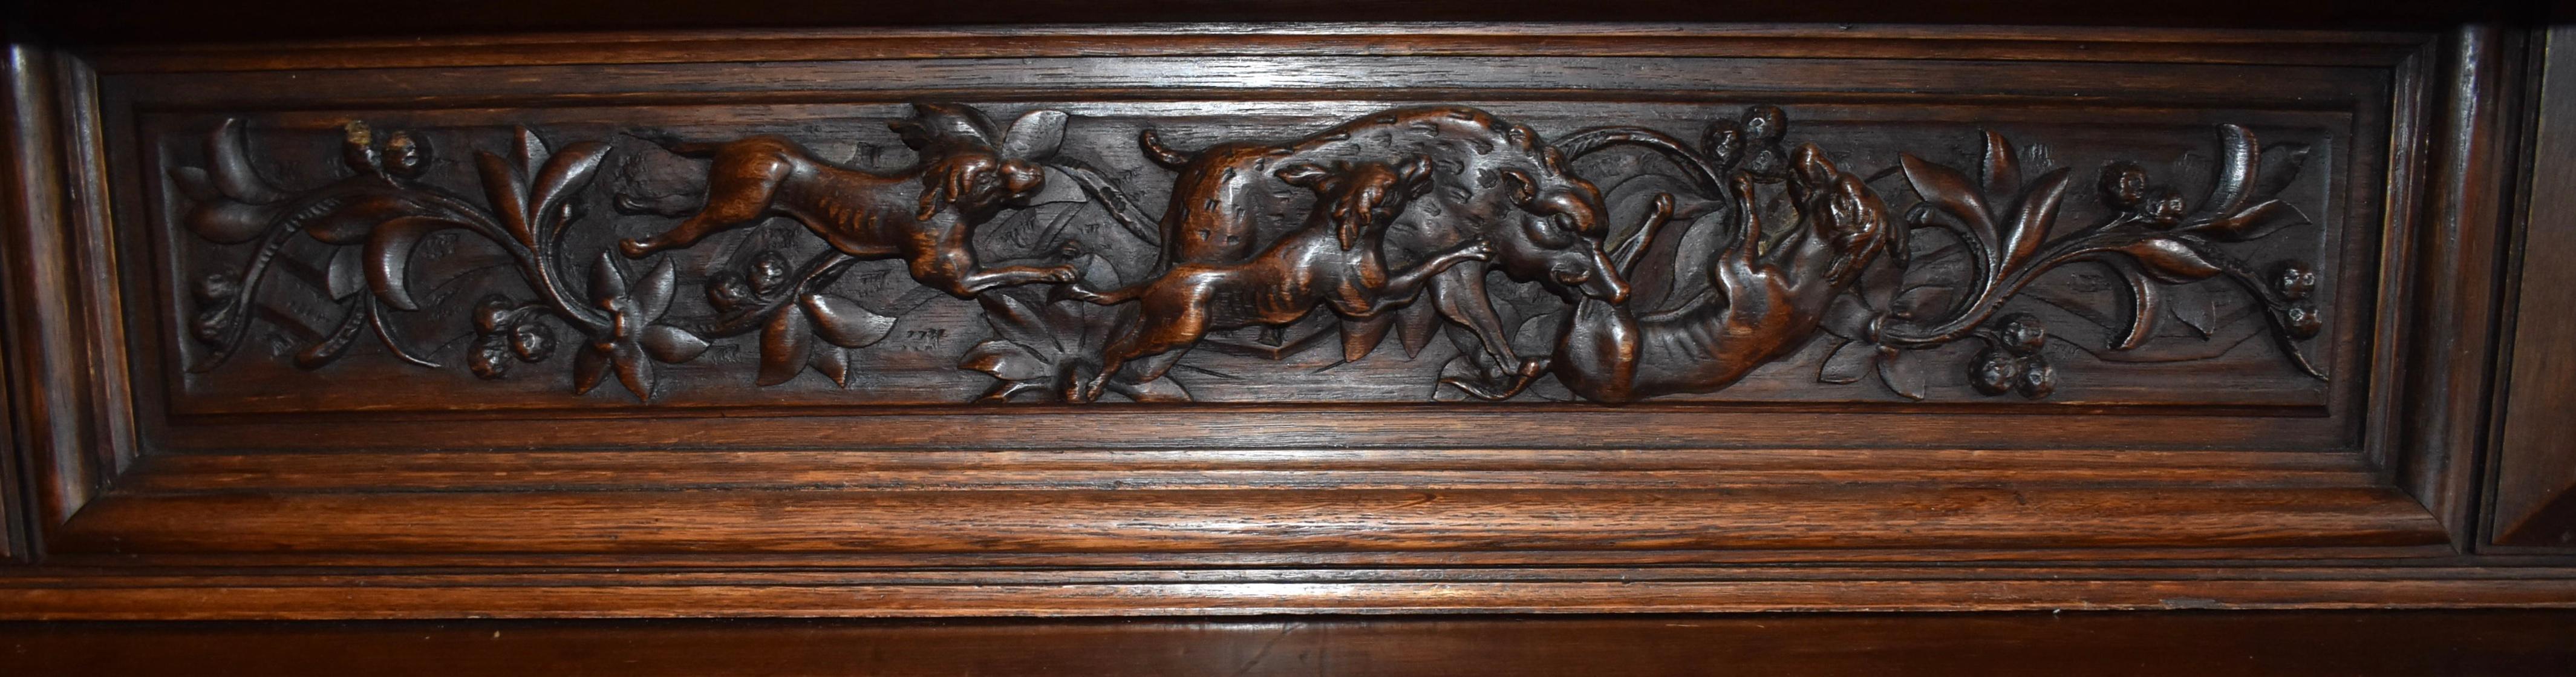 French Renaissance Revival Carved Hunt Cabinet For Sale 1